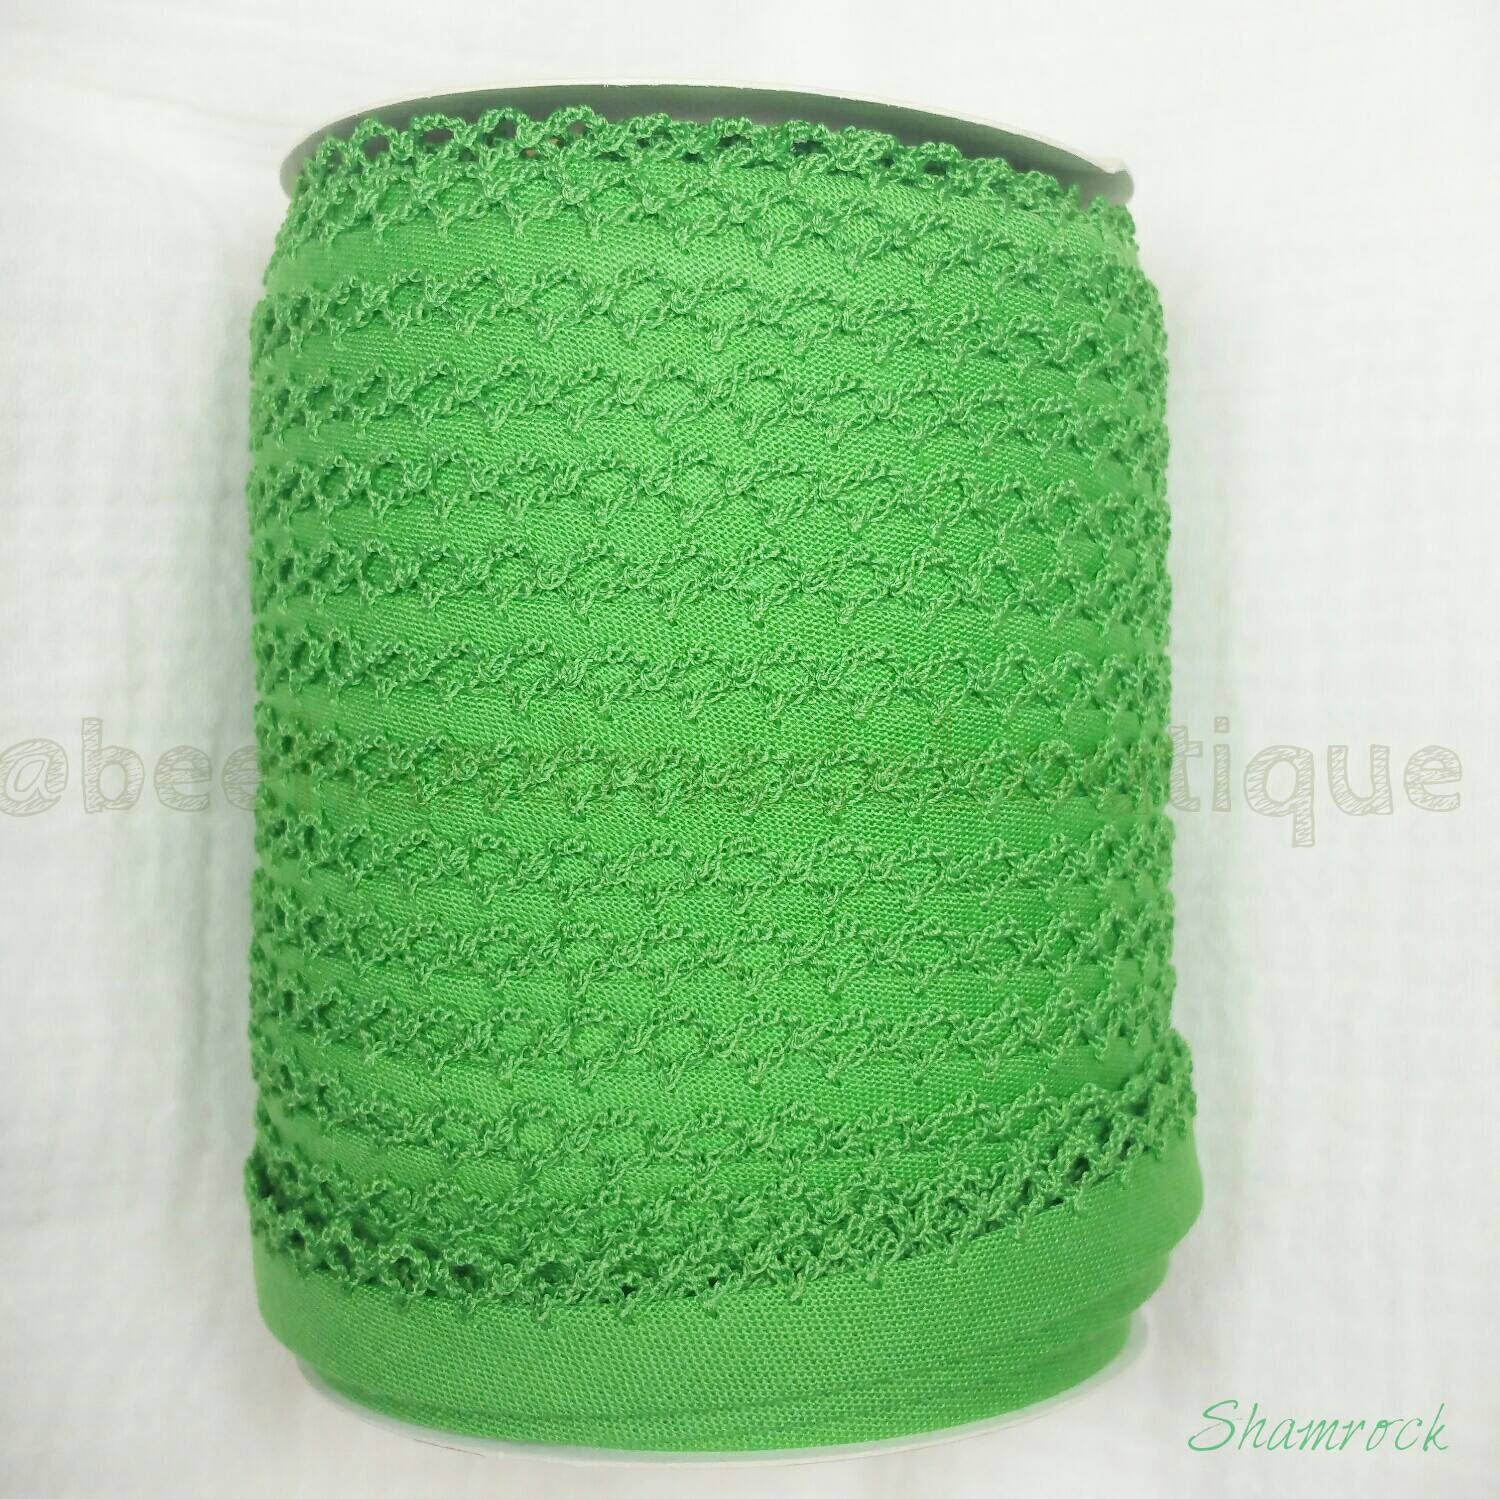 Green Picot Edge Bias Tape, Double Fold Bias Tape, Crochet Edge Bias Tape, Quilt Binding, SHAMROCK Crochet Bias Tape By the Yard, Green Lace